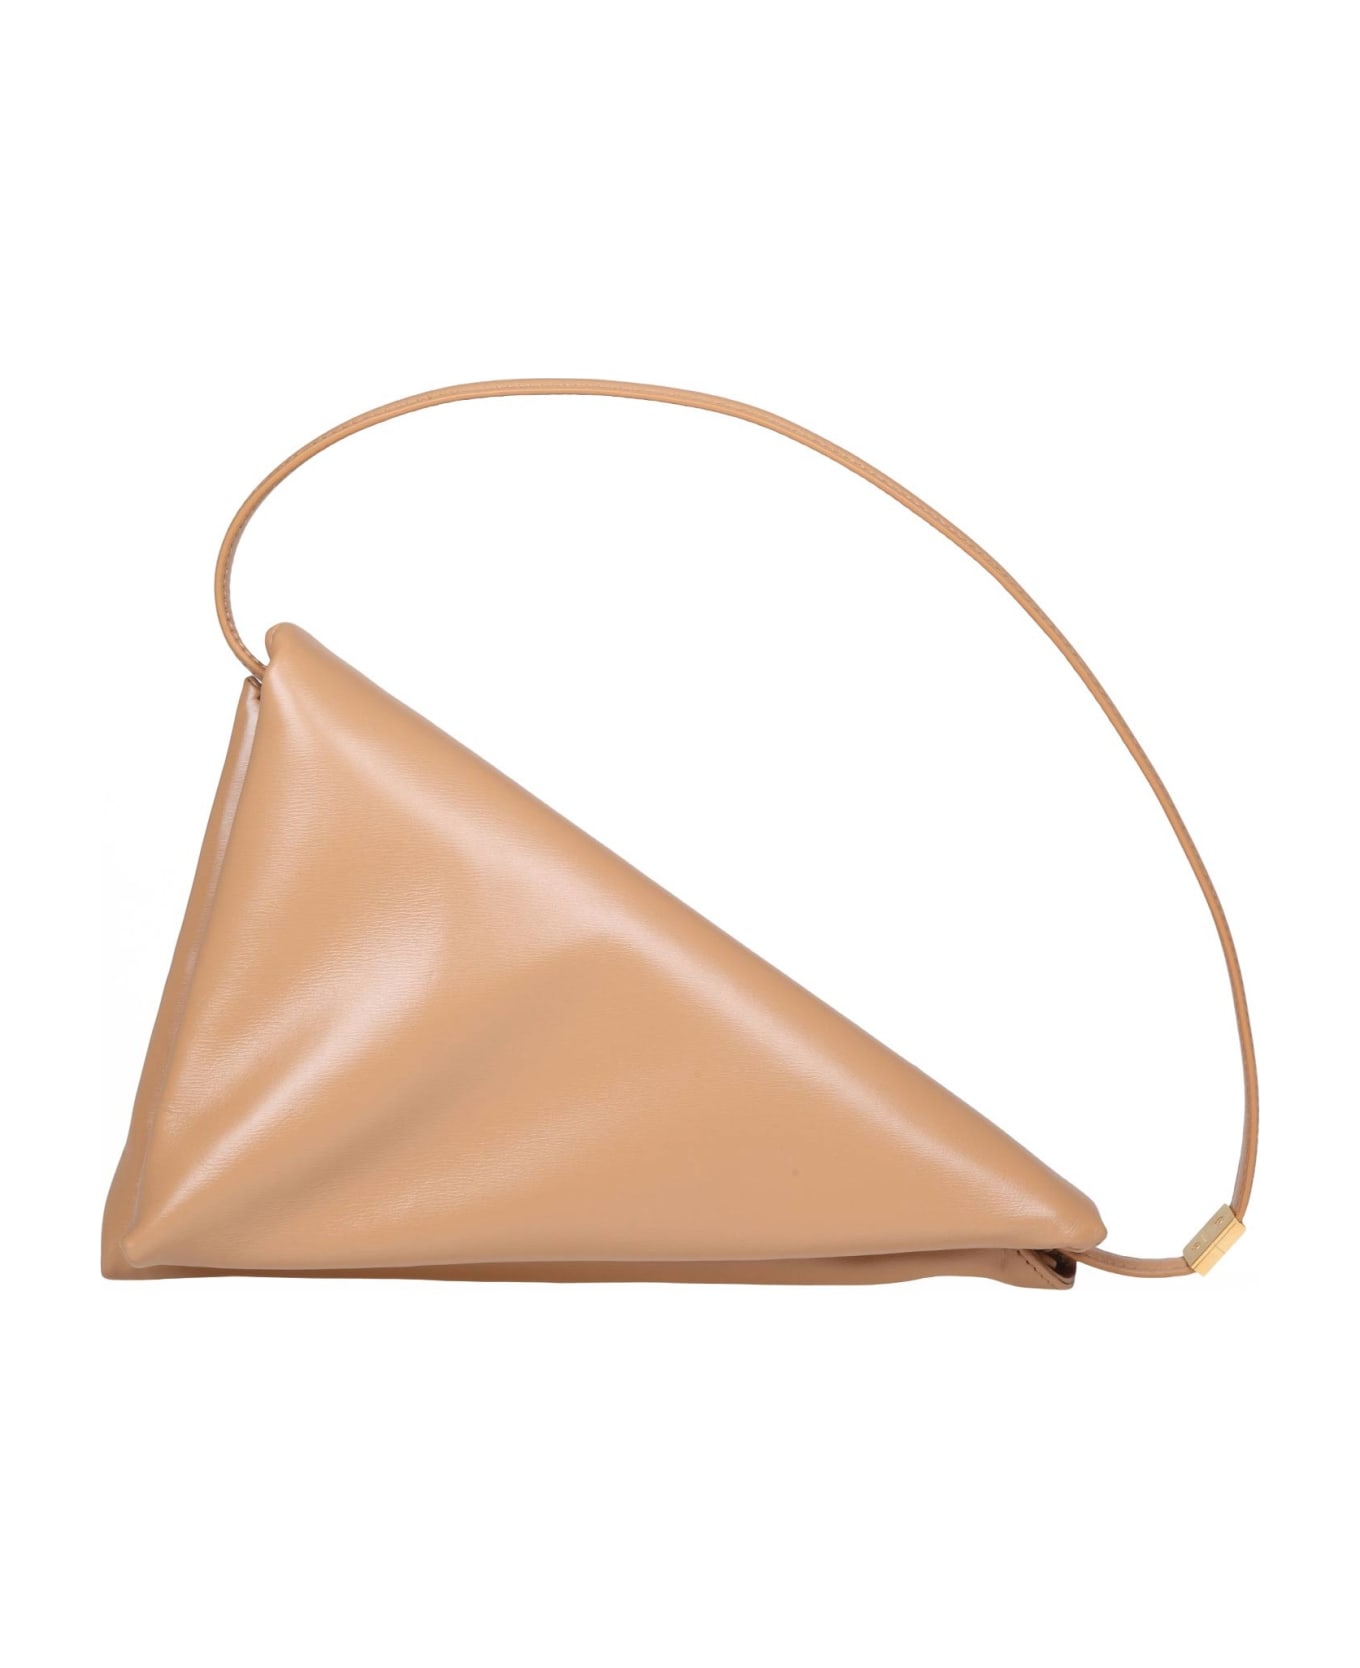 Marni Prisma Triangle Bag In Beige Leather - BEIGE